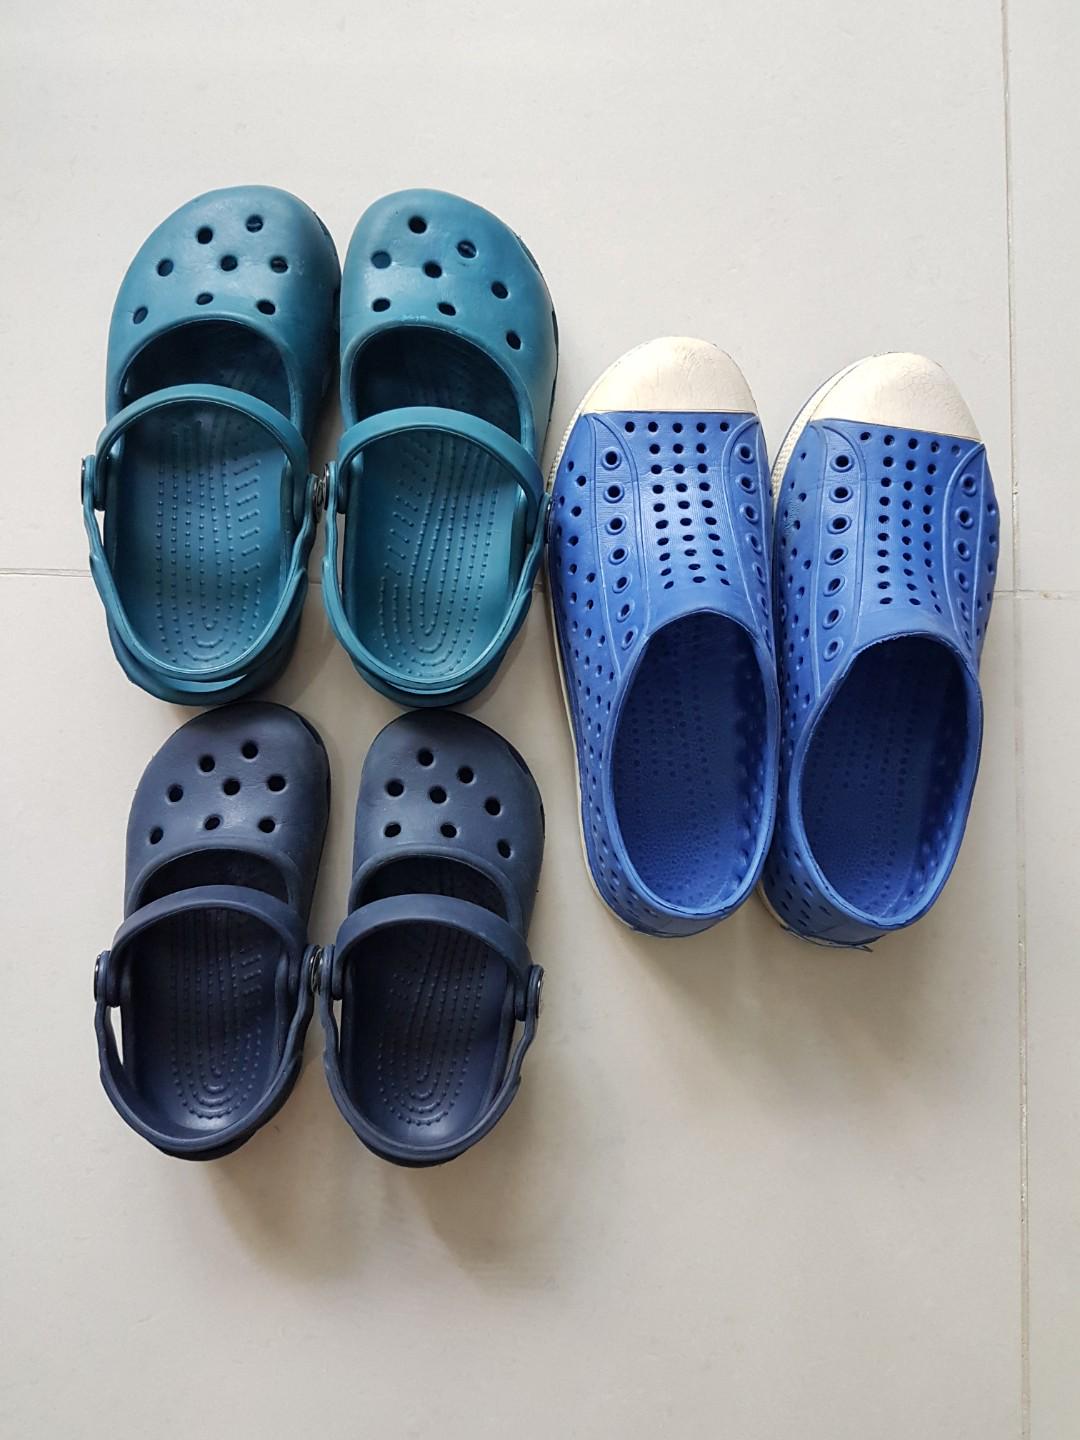 2 Crocs sandal and cotton on kids shoes 